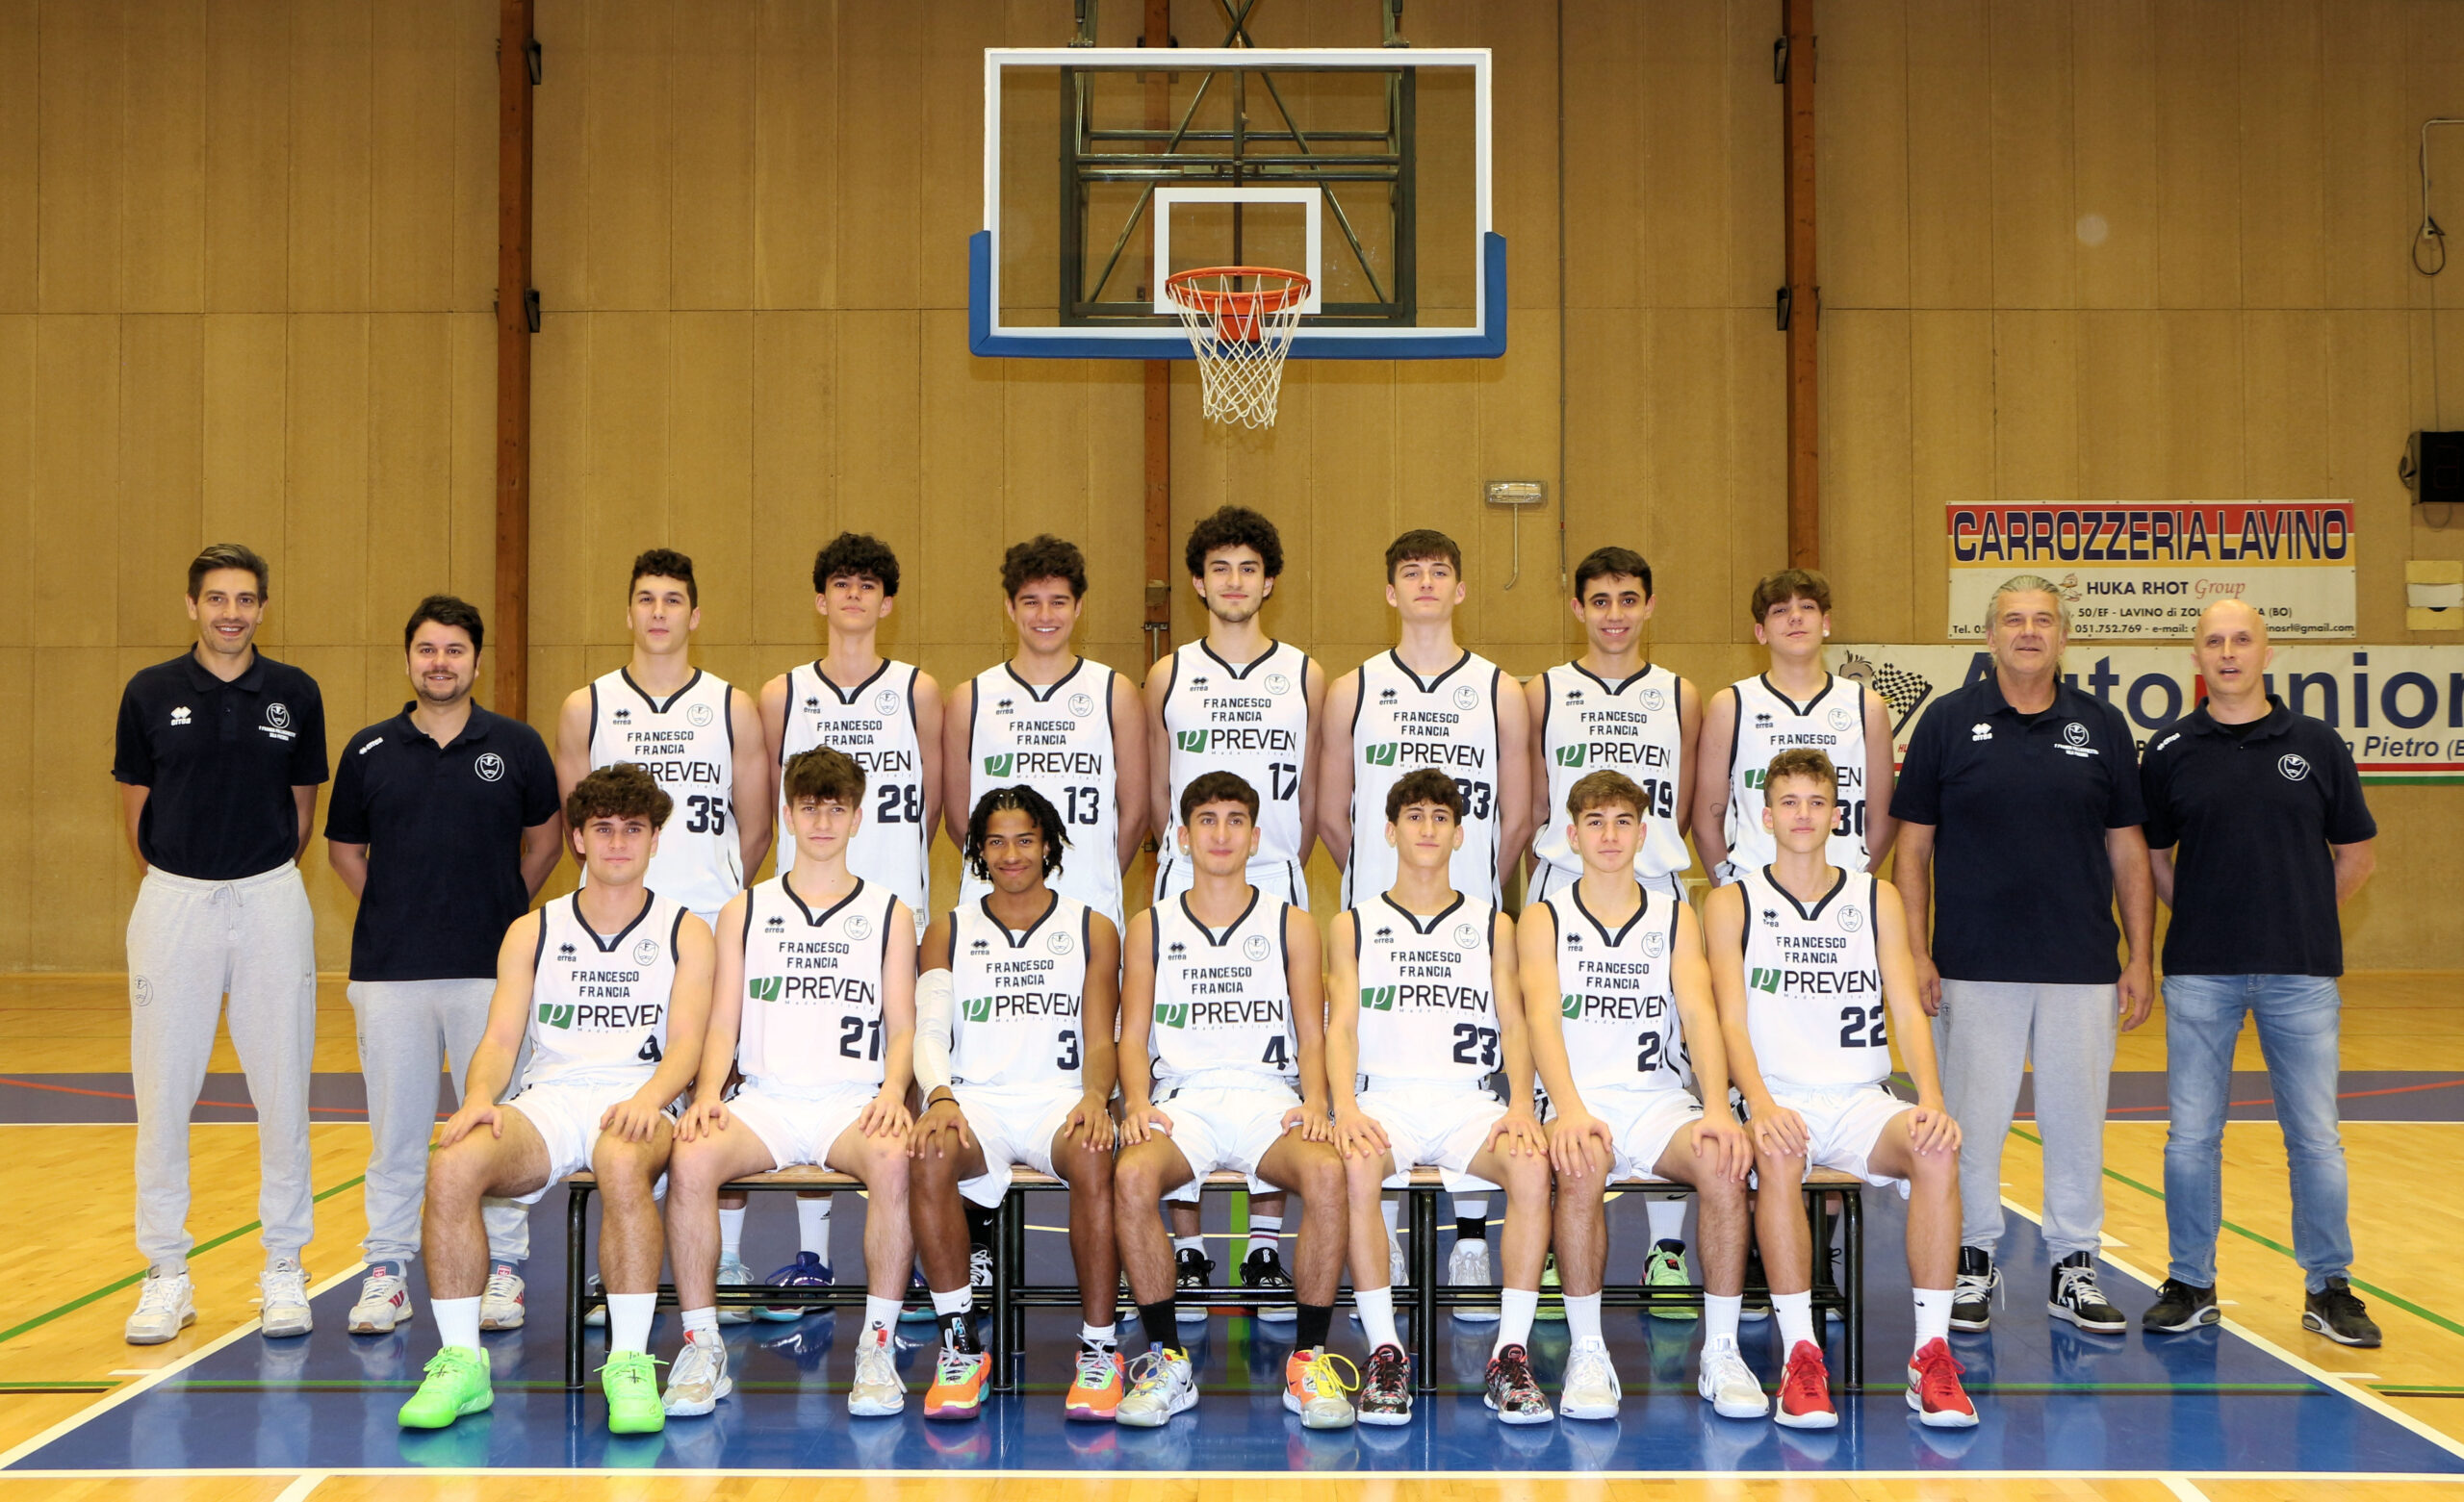 Squadra Under19 Gold - Francesco Francia Basket